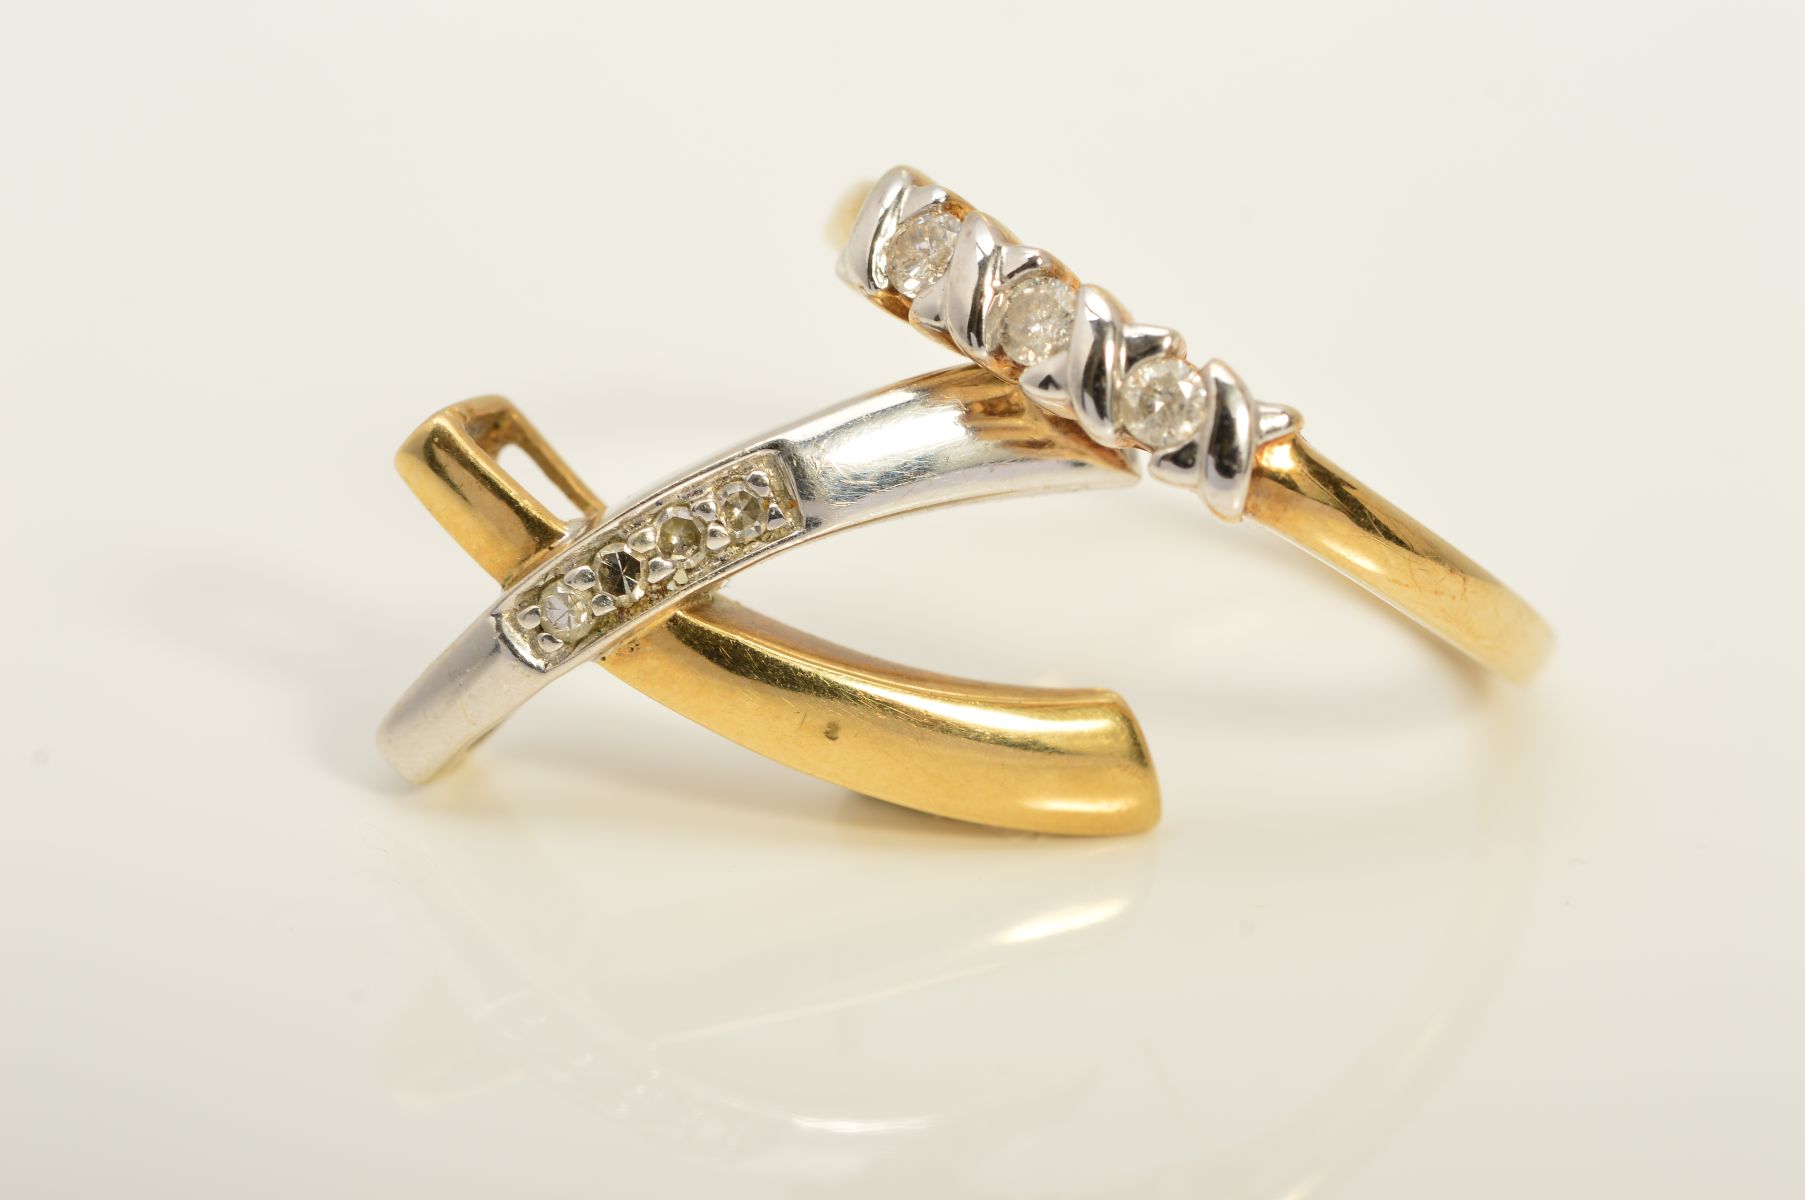 A 9CT GOLD BI-COLOUR DIAMOND RING AND PENDANT, the ring designed as three brilliant cut diamonds